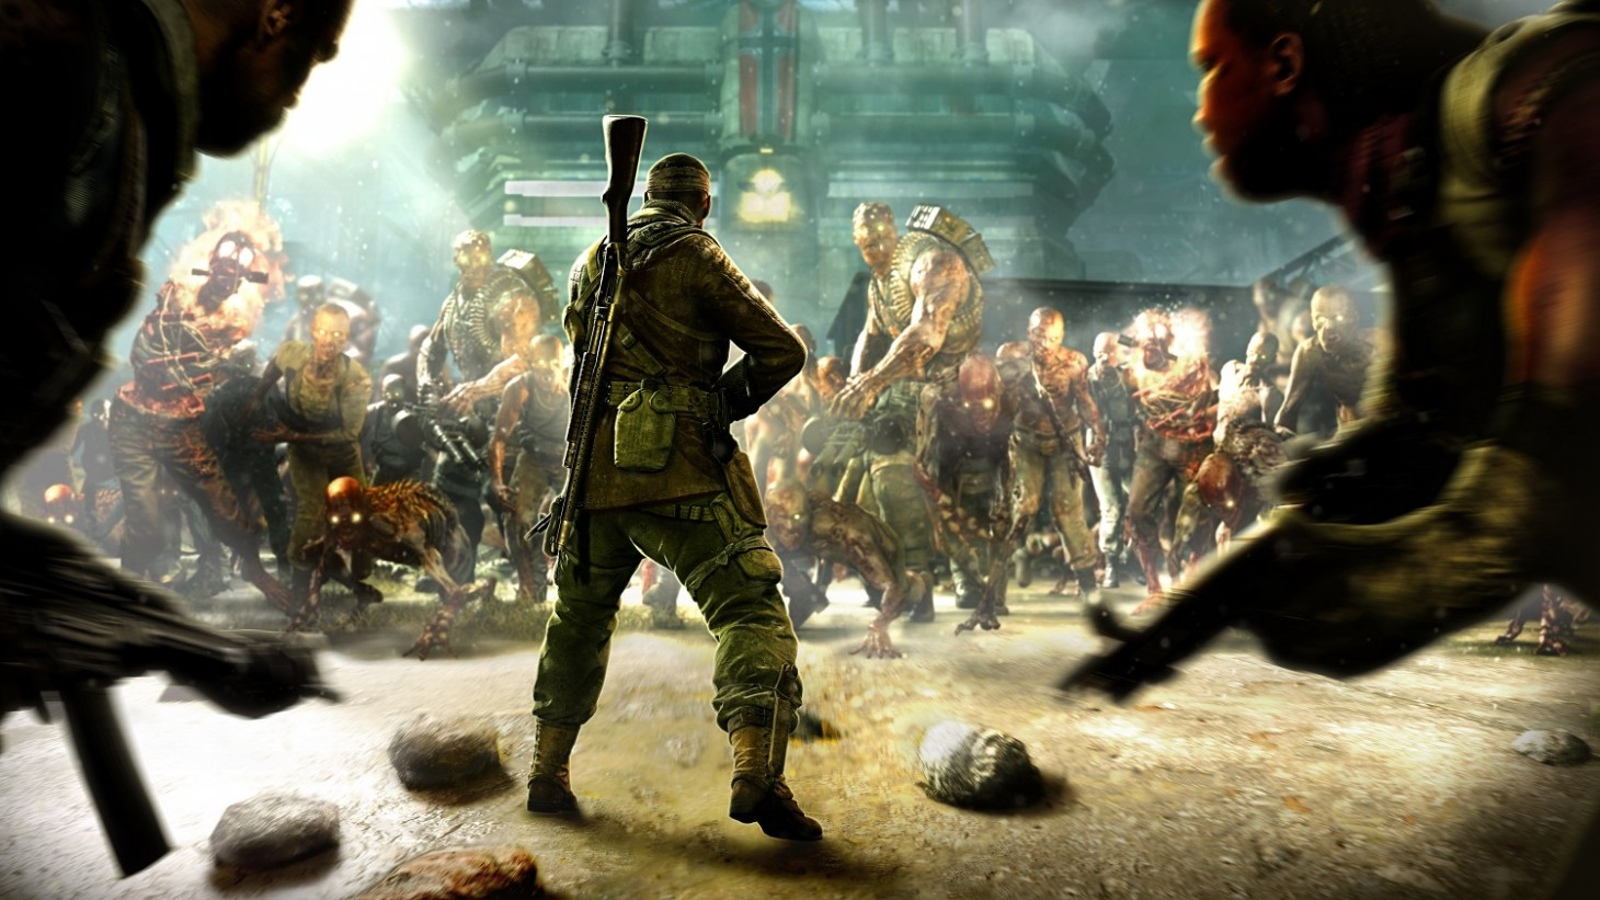 100 MAN GIANT ARMY! - Formata Gameplay 